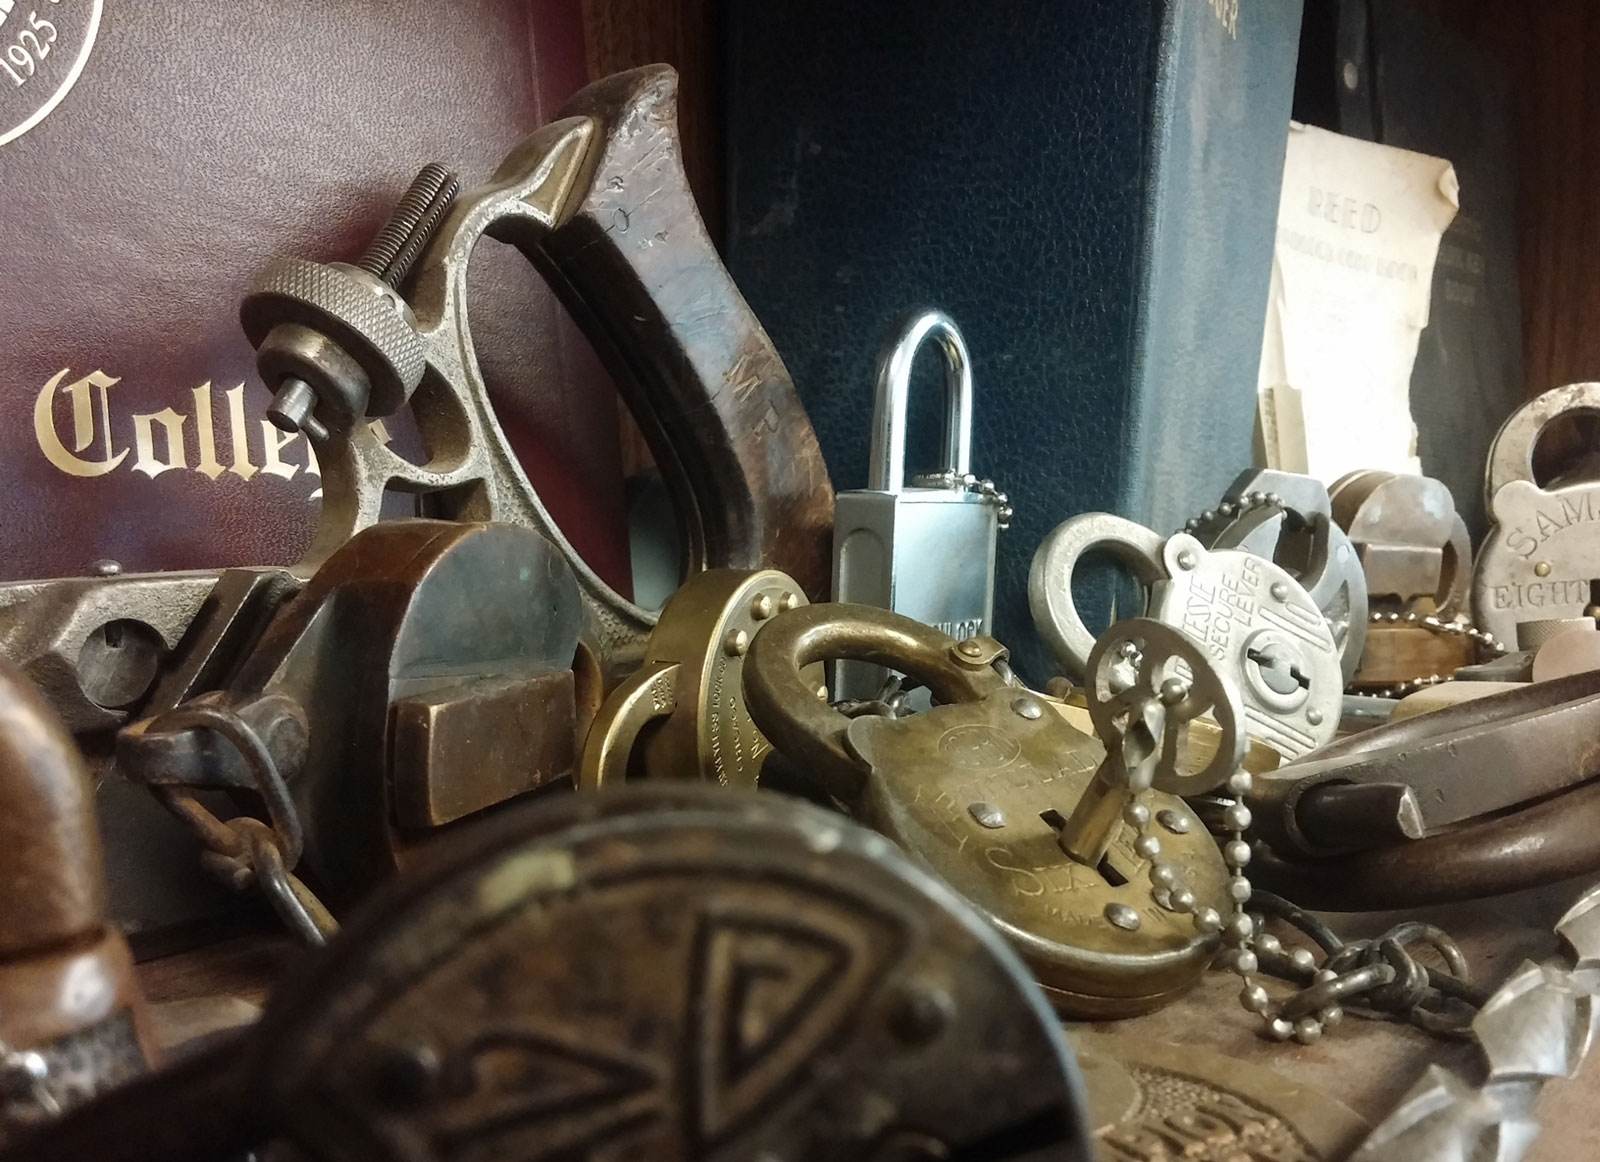 Many different types of locks